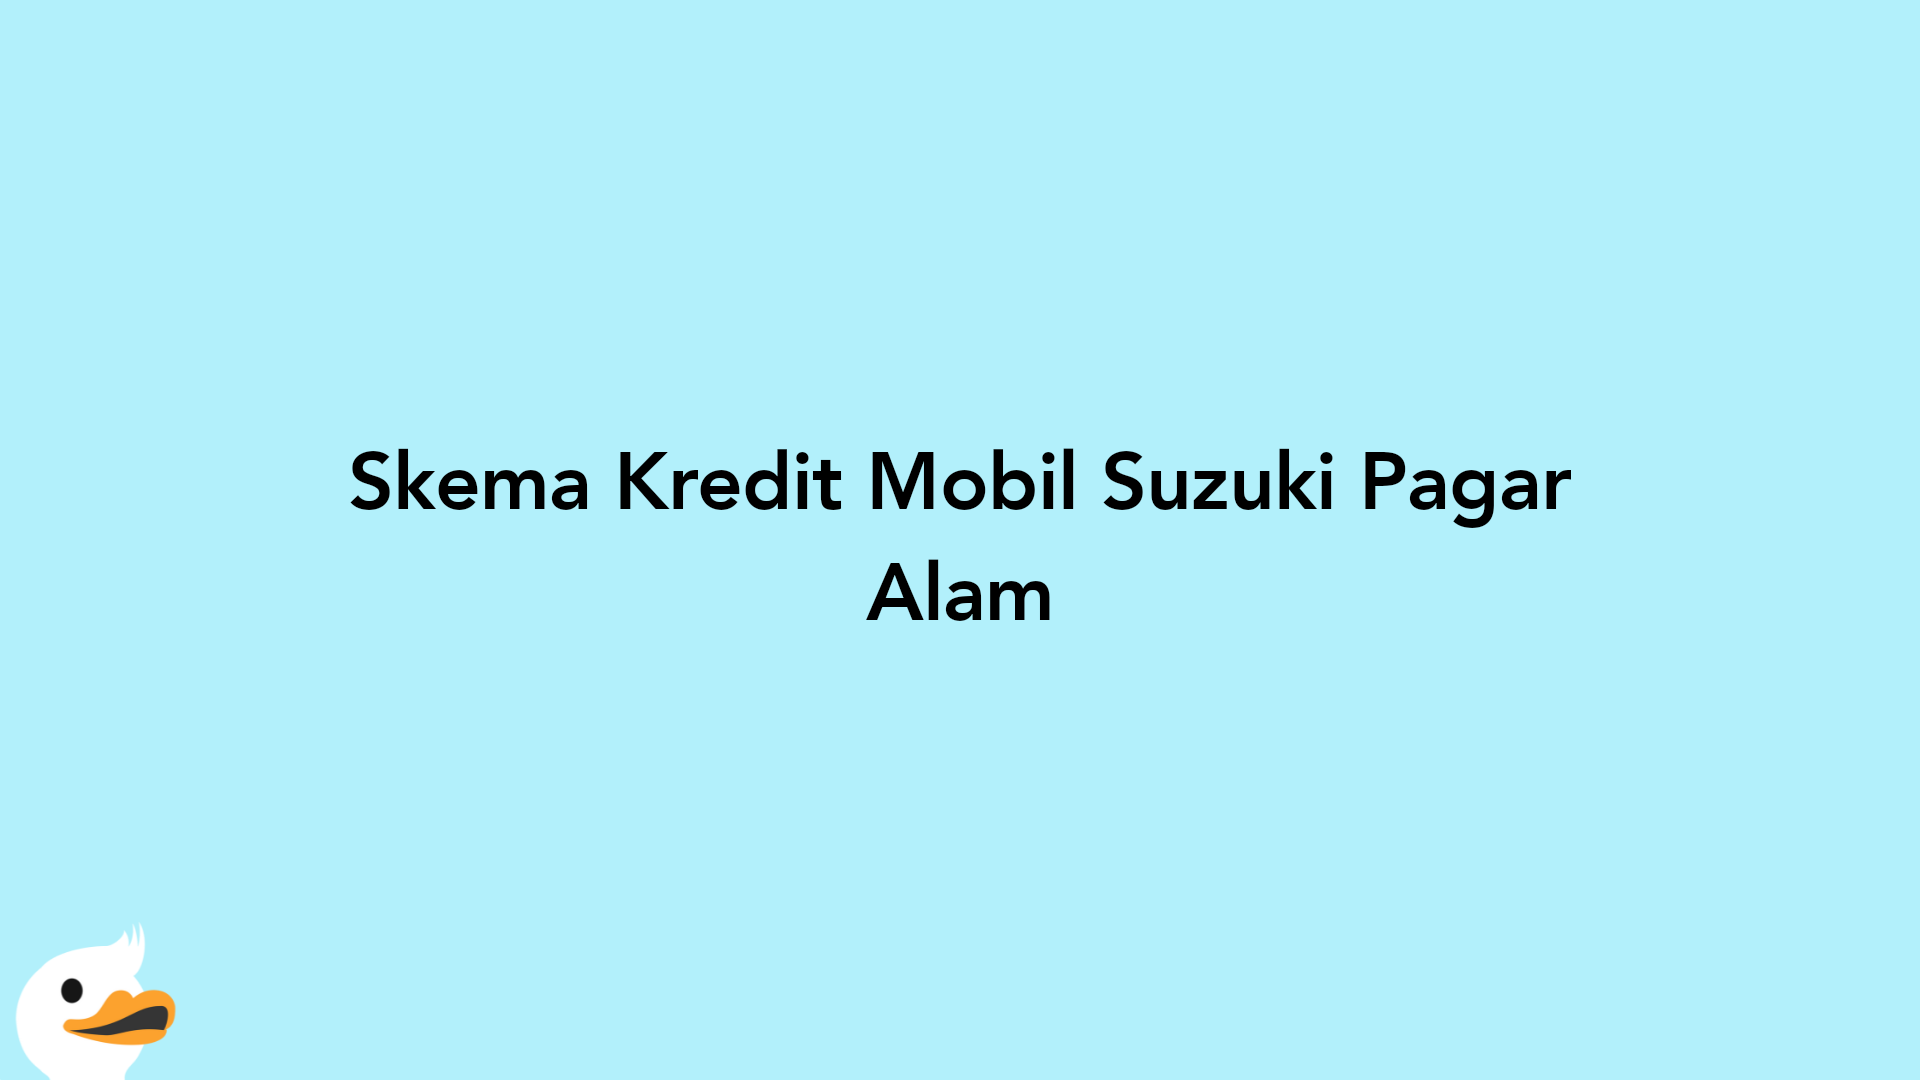 Skema Kredit Mobil Suzuki Pagar Alam